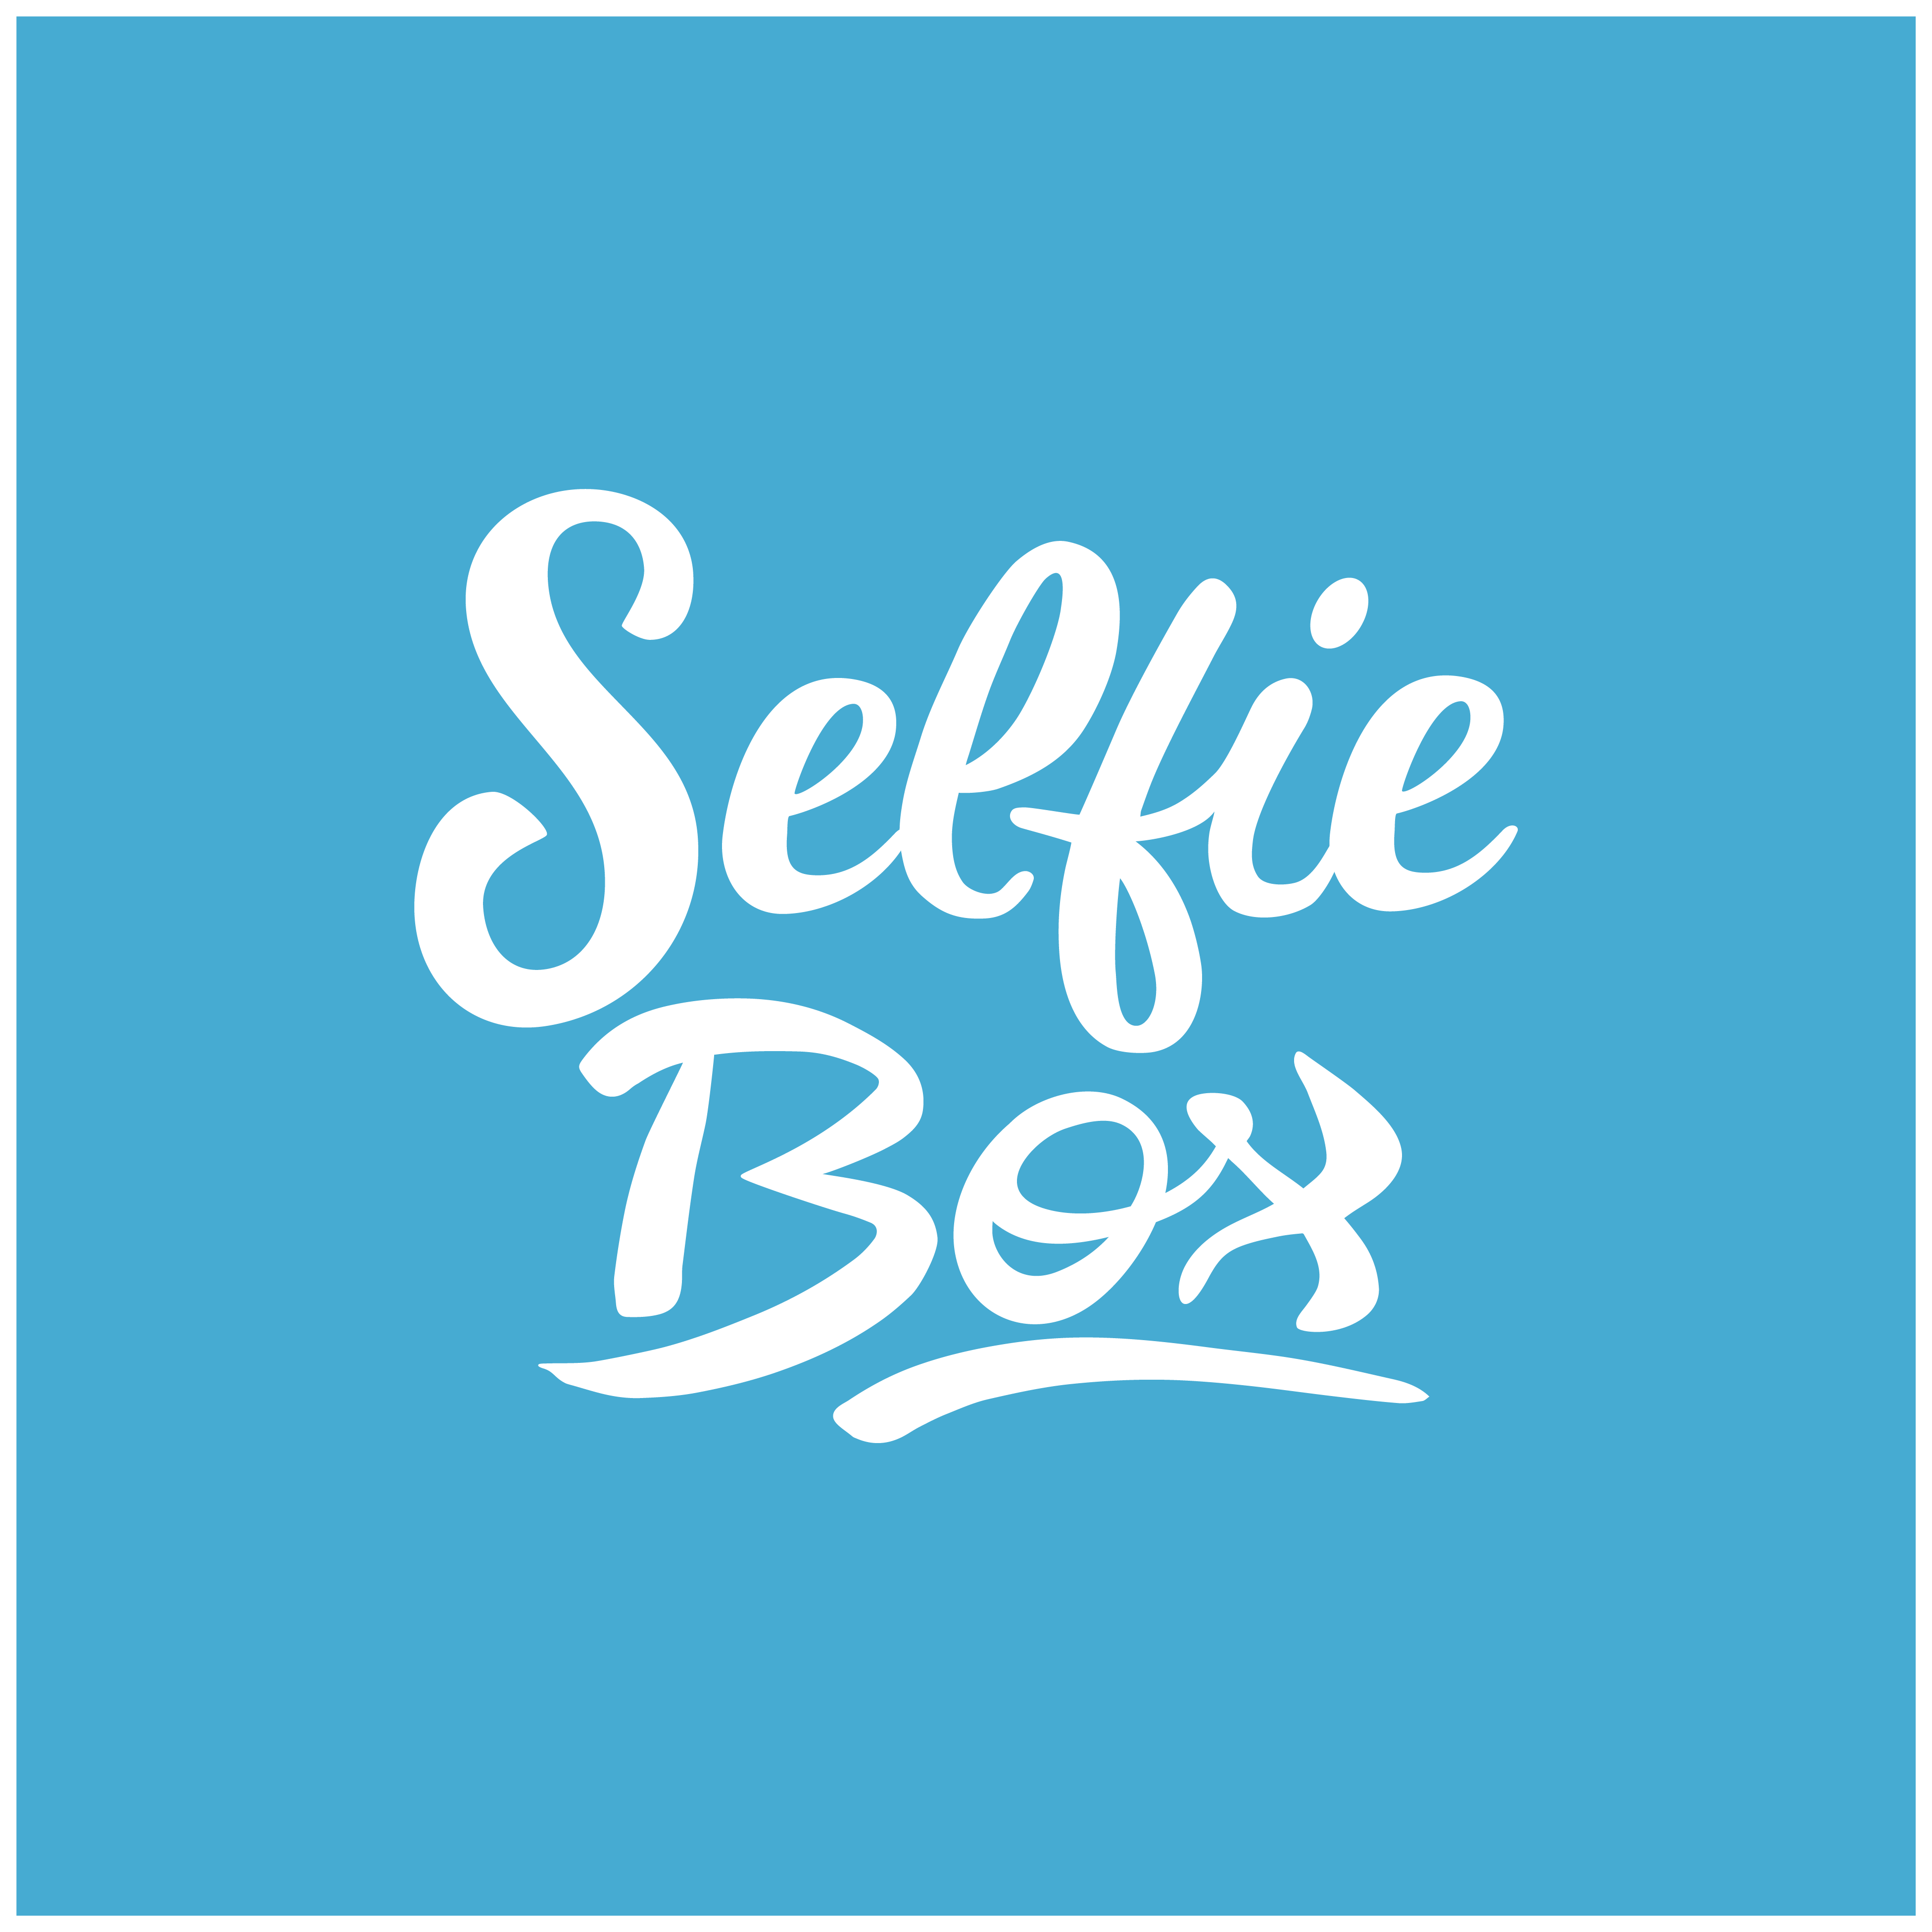 Selfiebox